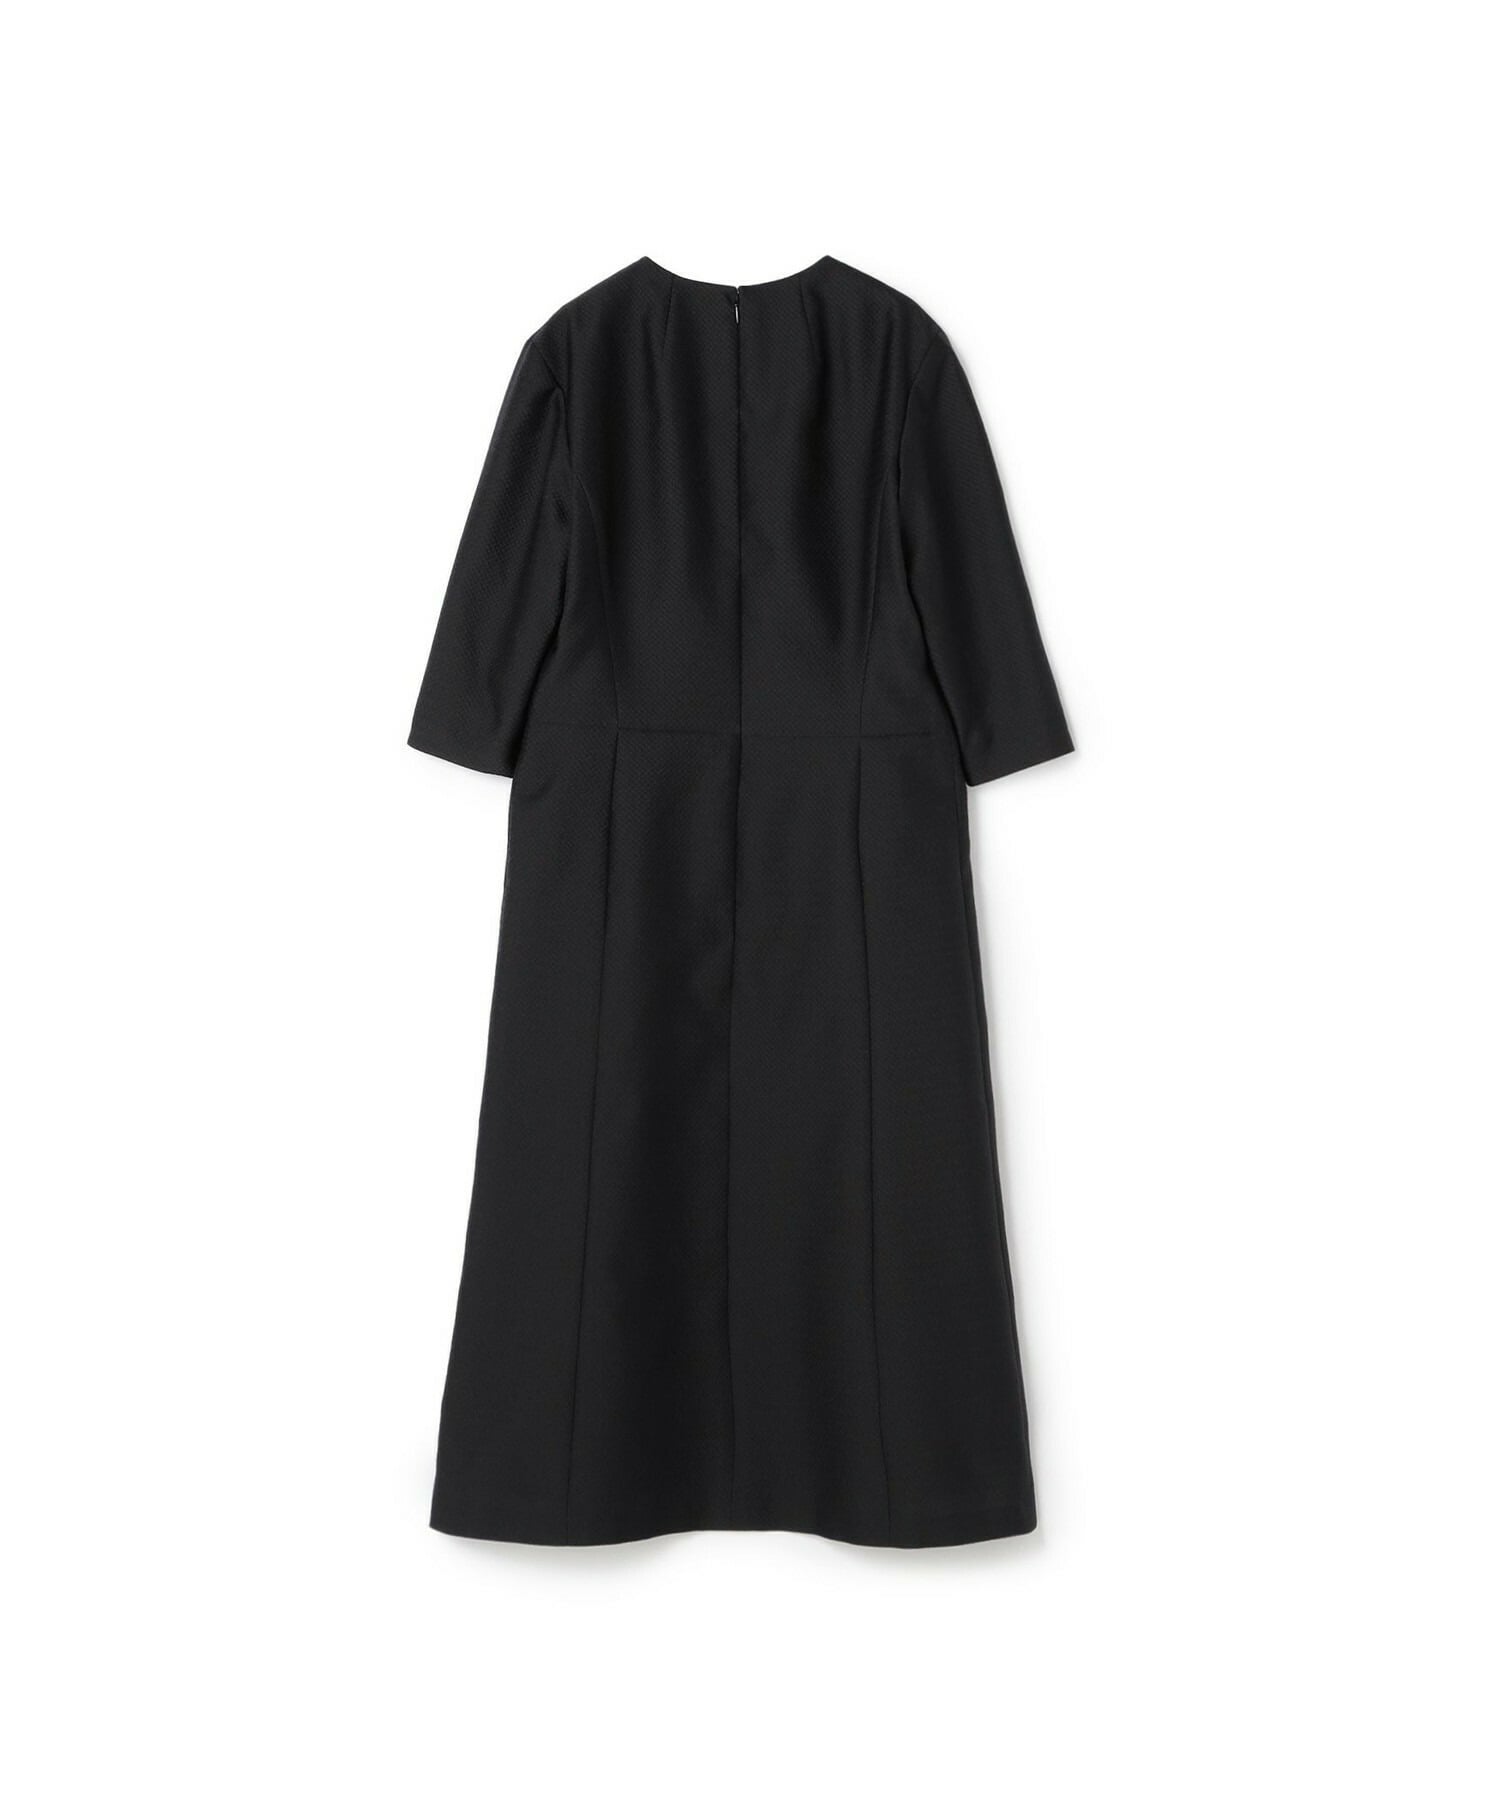 【yoshie inaba】スクエアージャガードドレス 詳細画像 ブラック 5